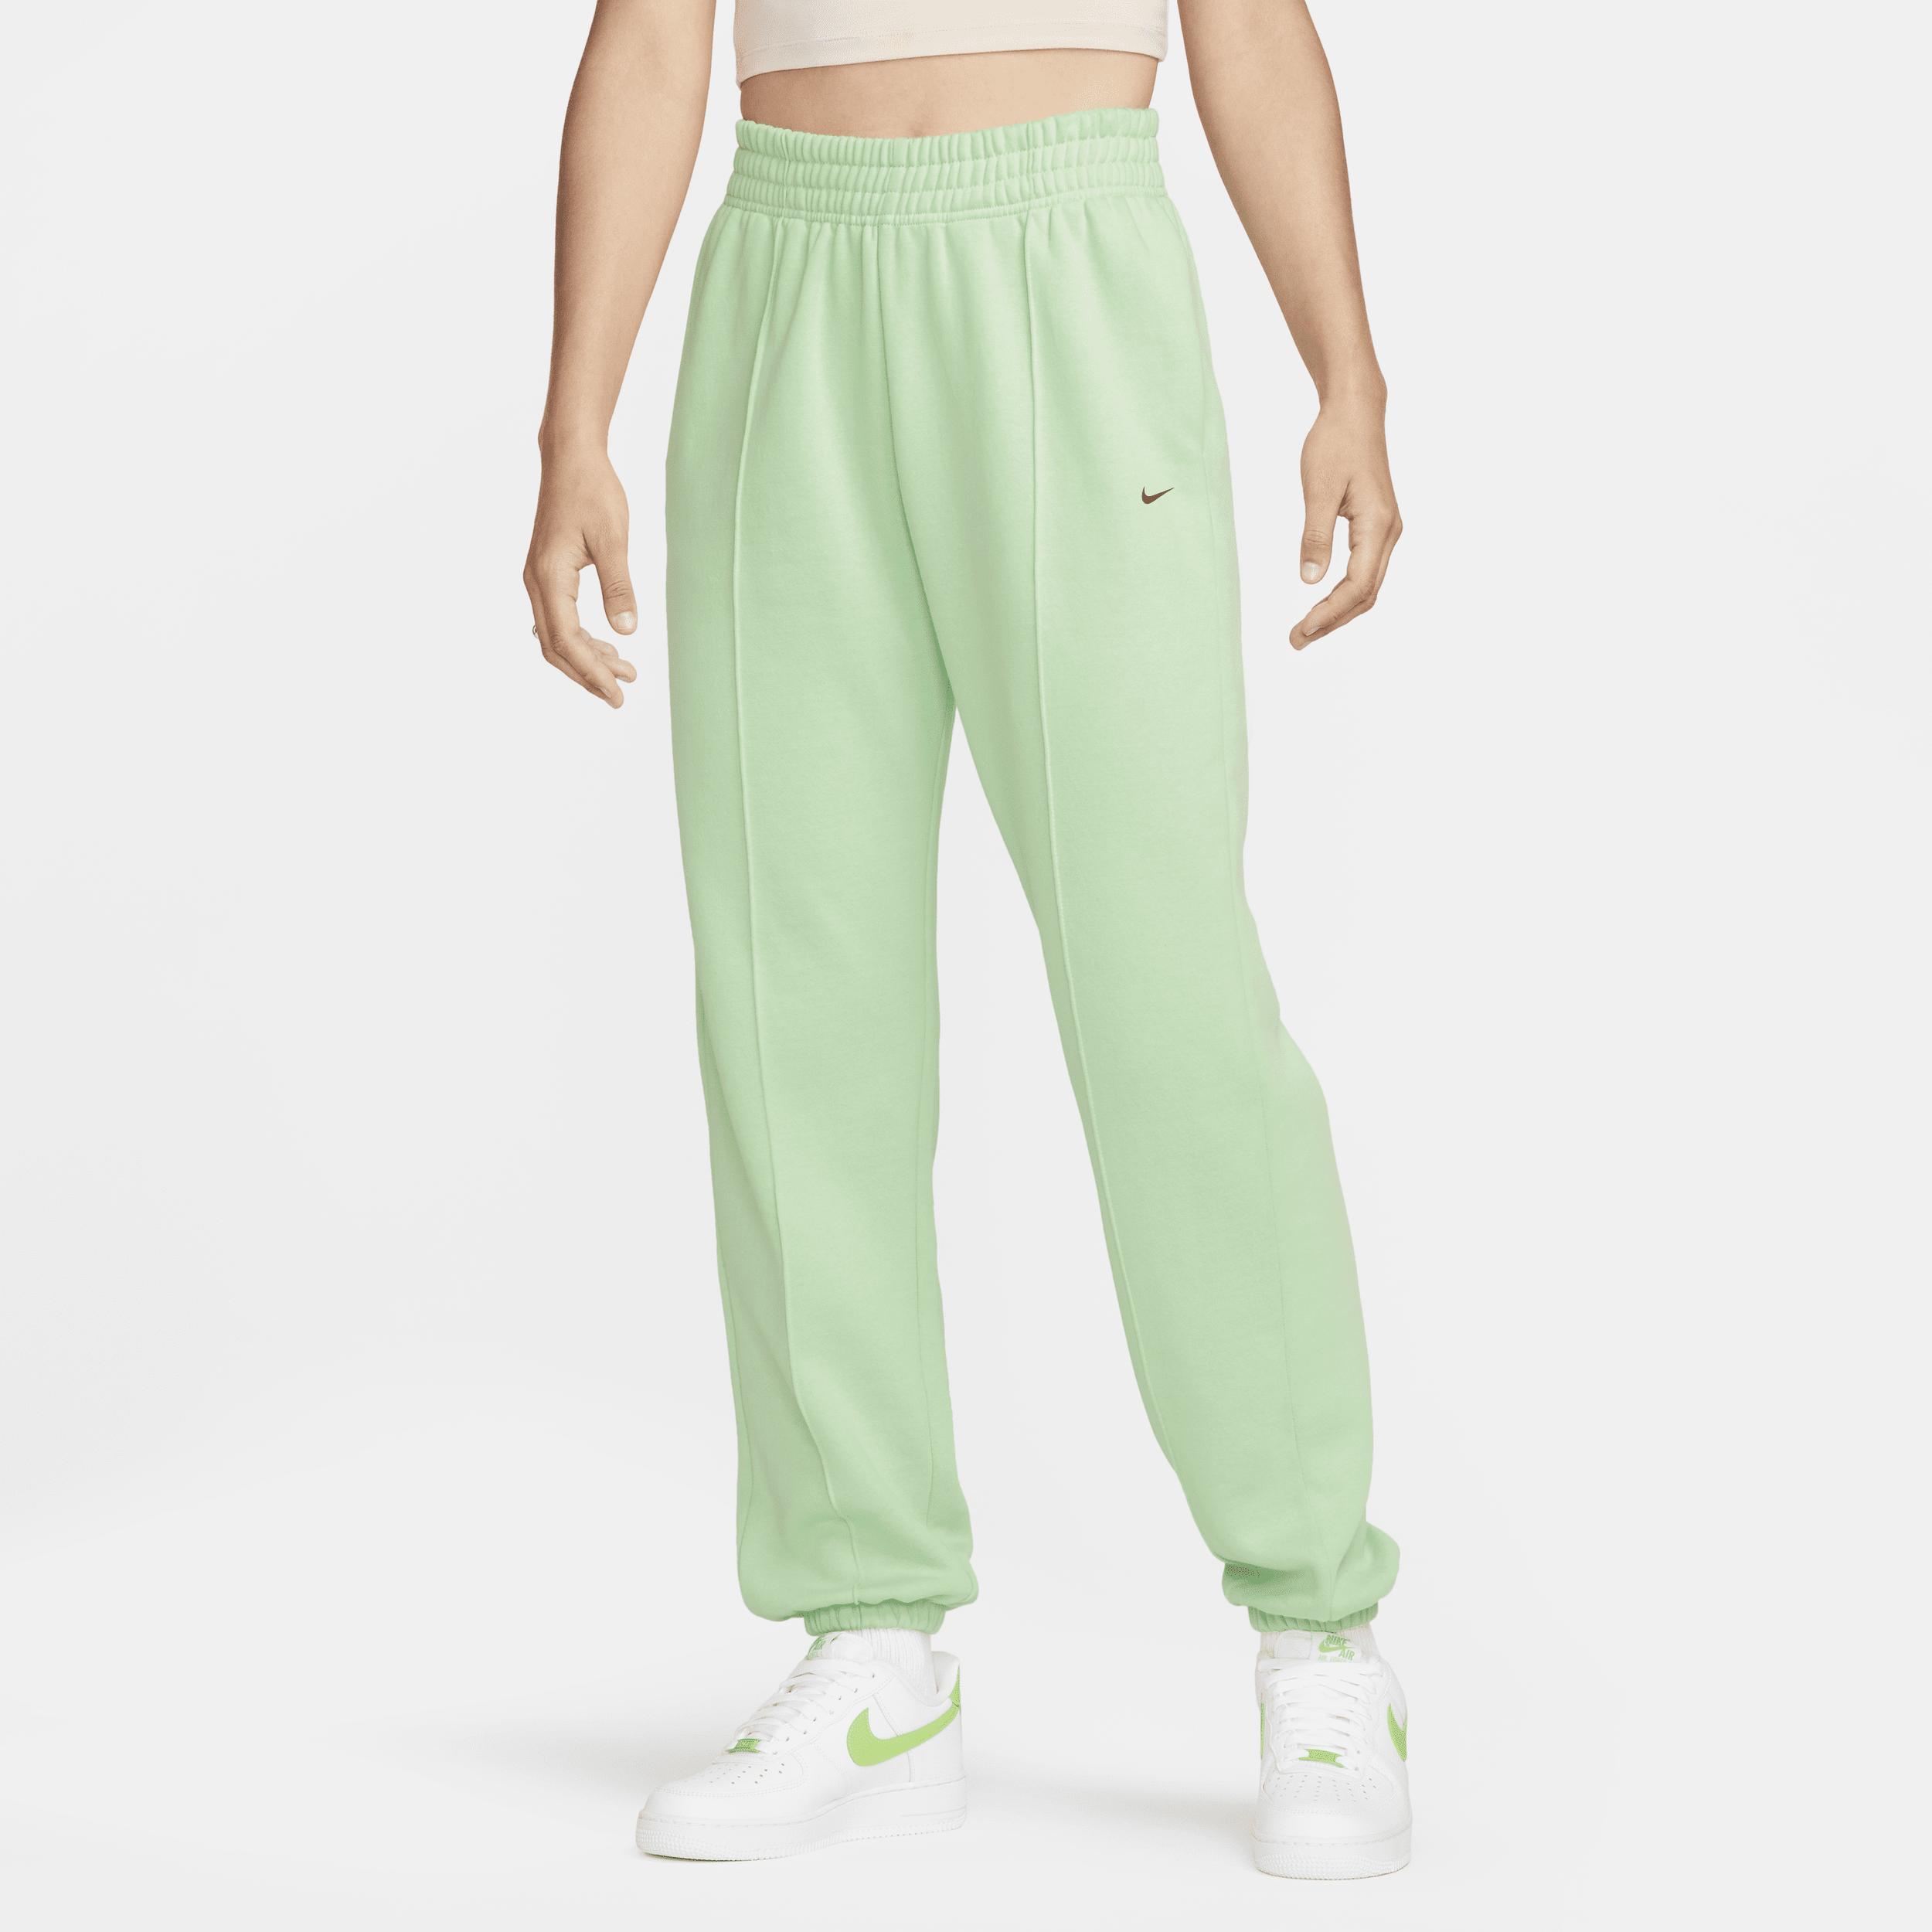 Pantaloni ampi in fleece Nike Sportswear – Donna - Verde